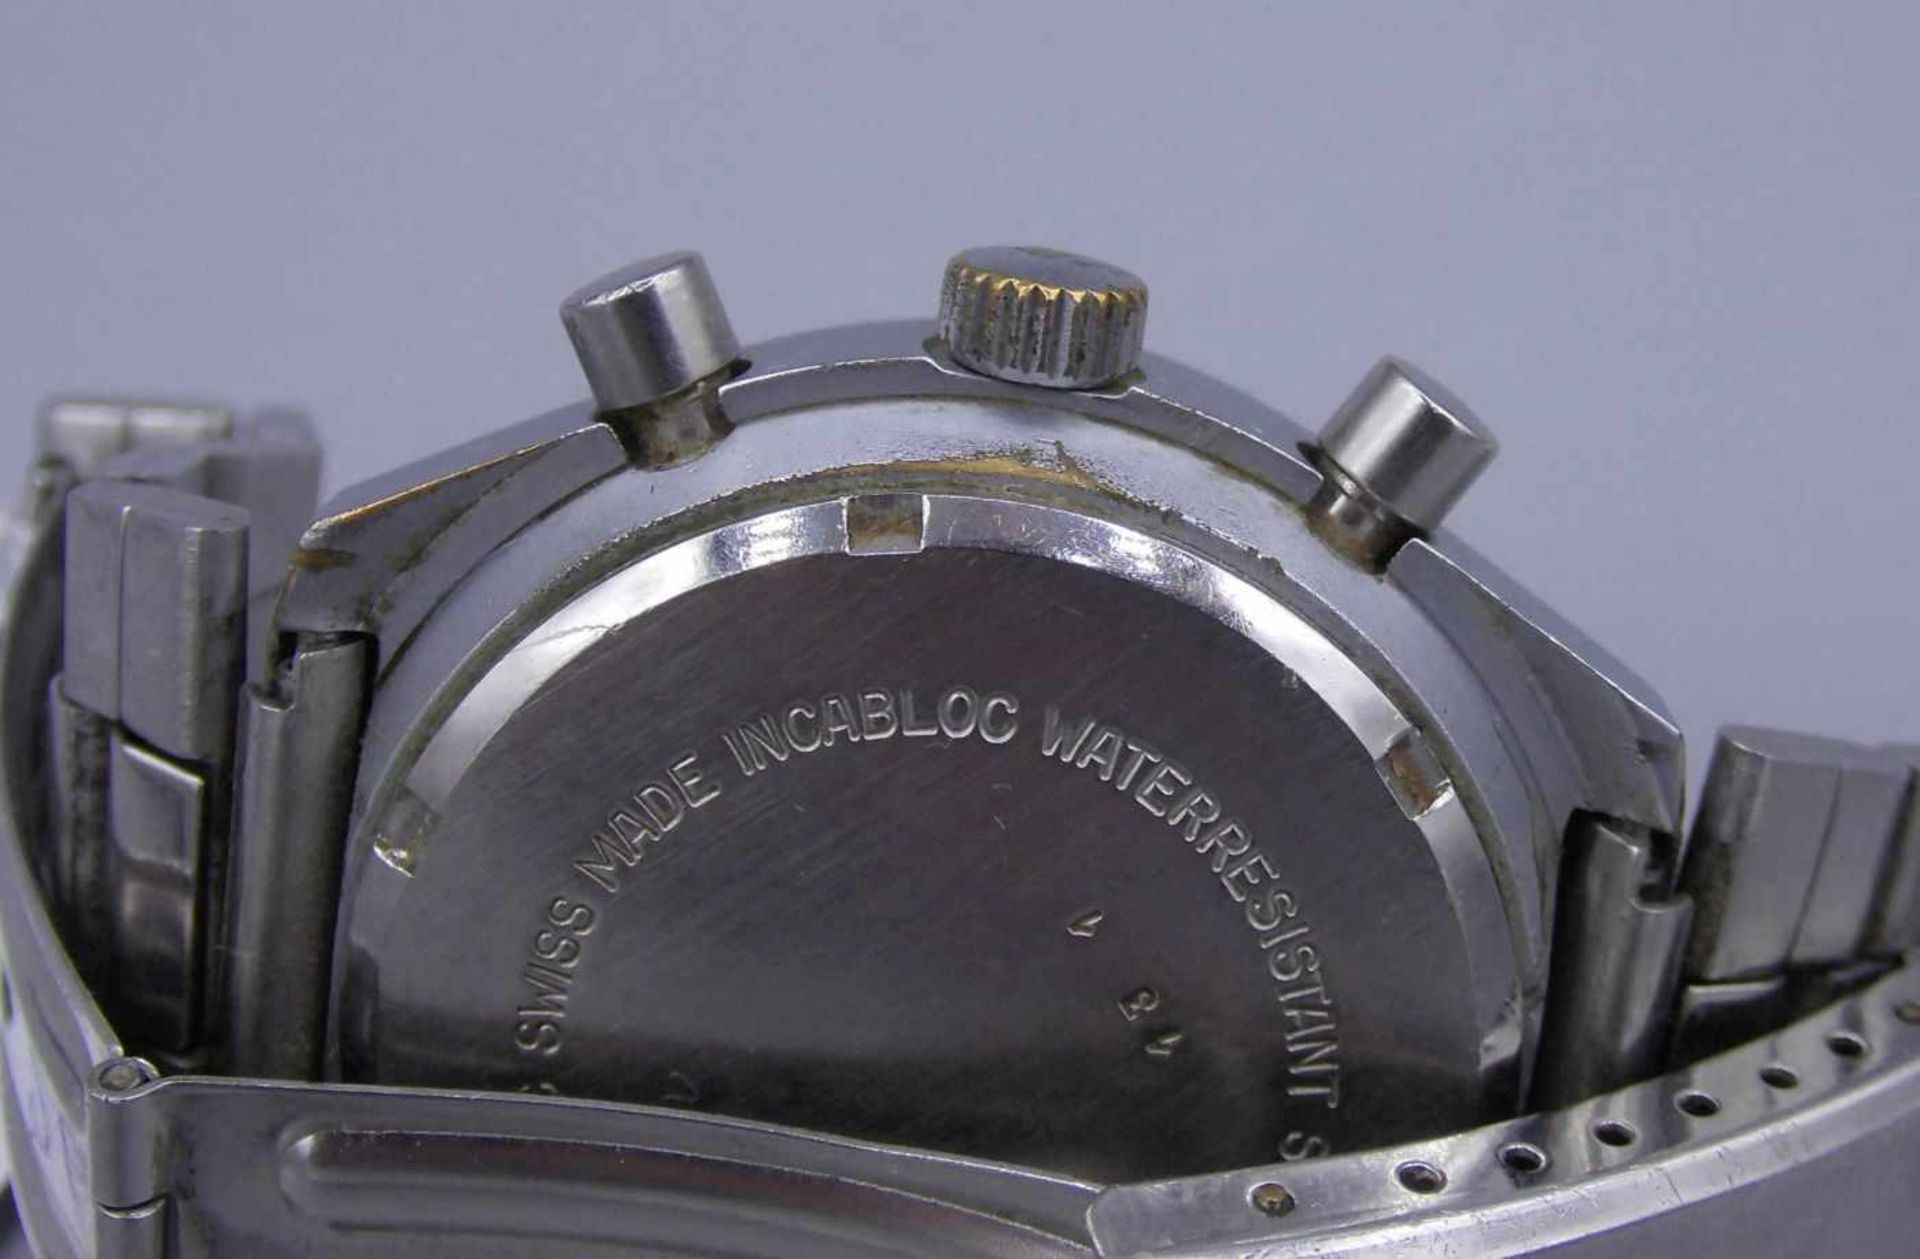 VINTAGE ARMBANDUHR / CHRONOGRAPH: ZENTRA - SAVOY / wristwatch, 2. H. 20. Jh., Handaufzug, - Image 6 of 6